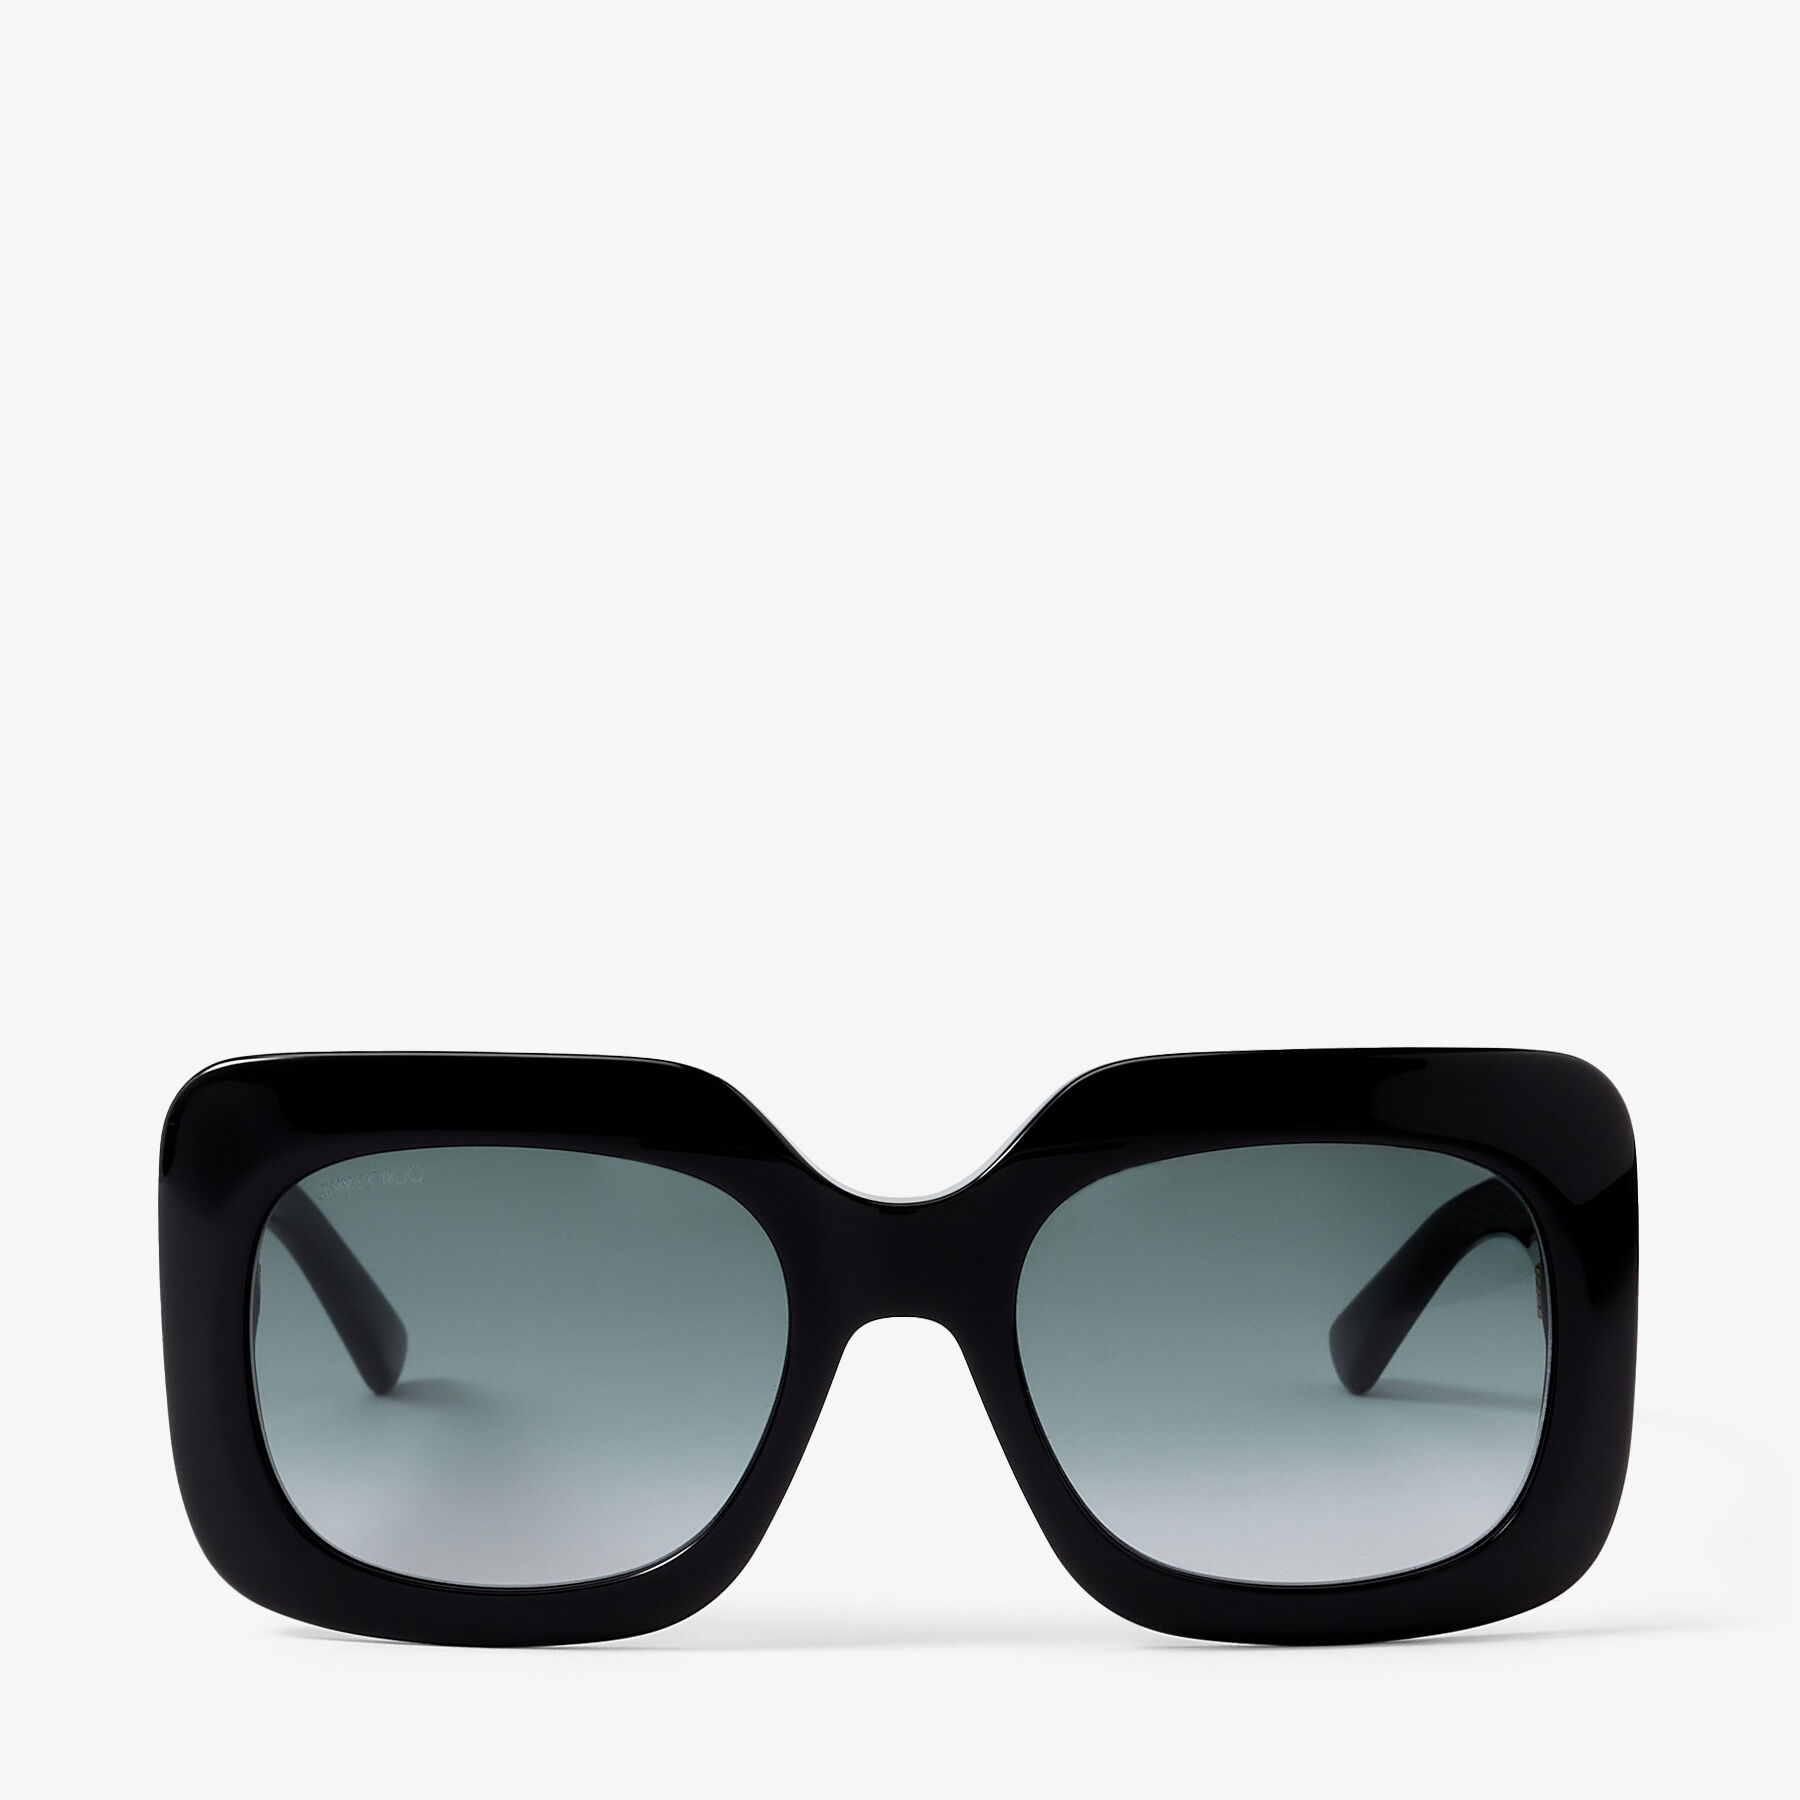 Stylish Jimmy Choo Sunglasses - Brand New